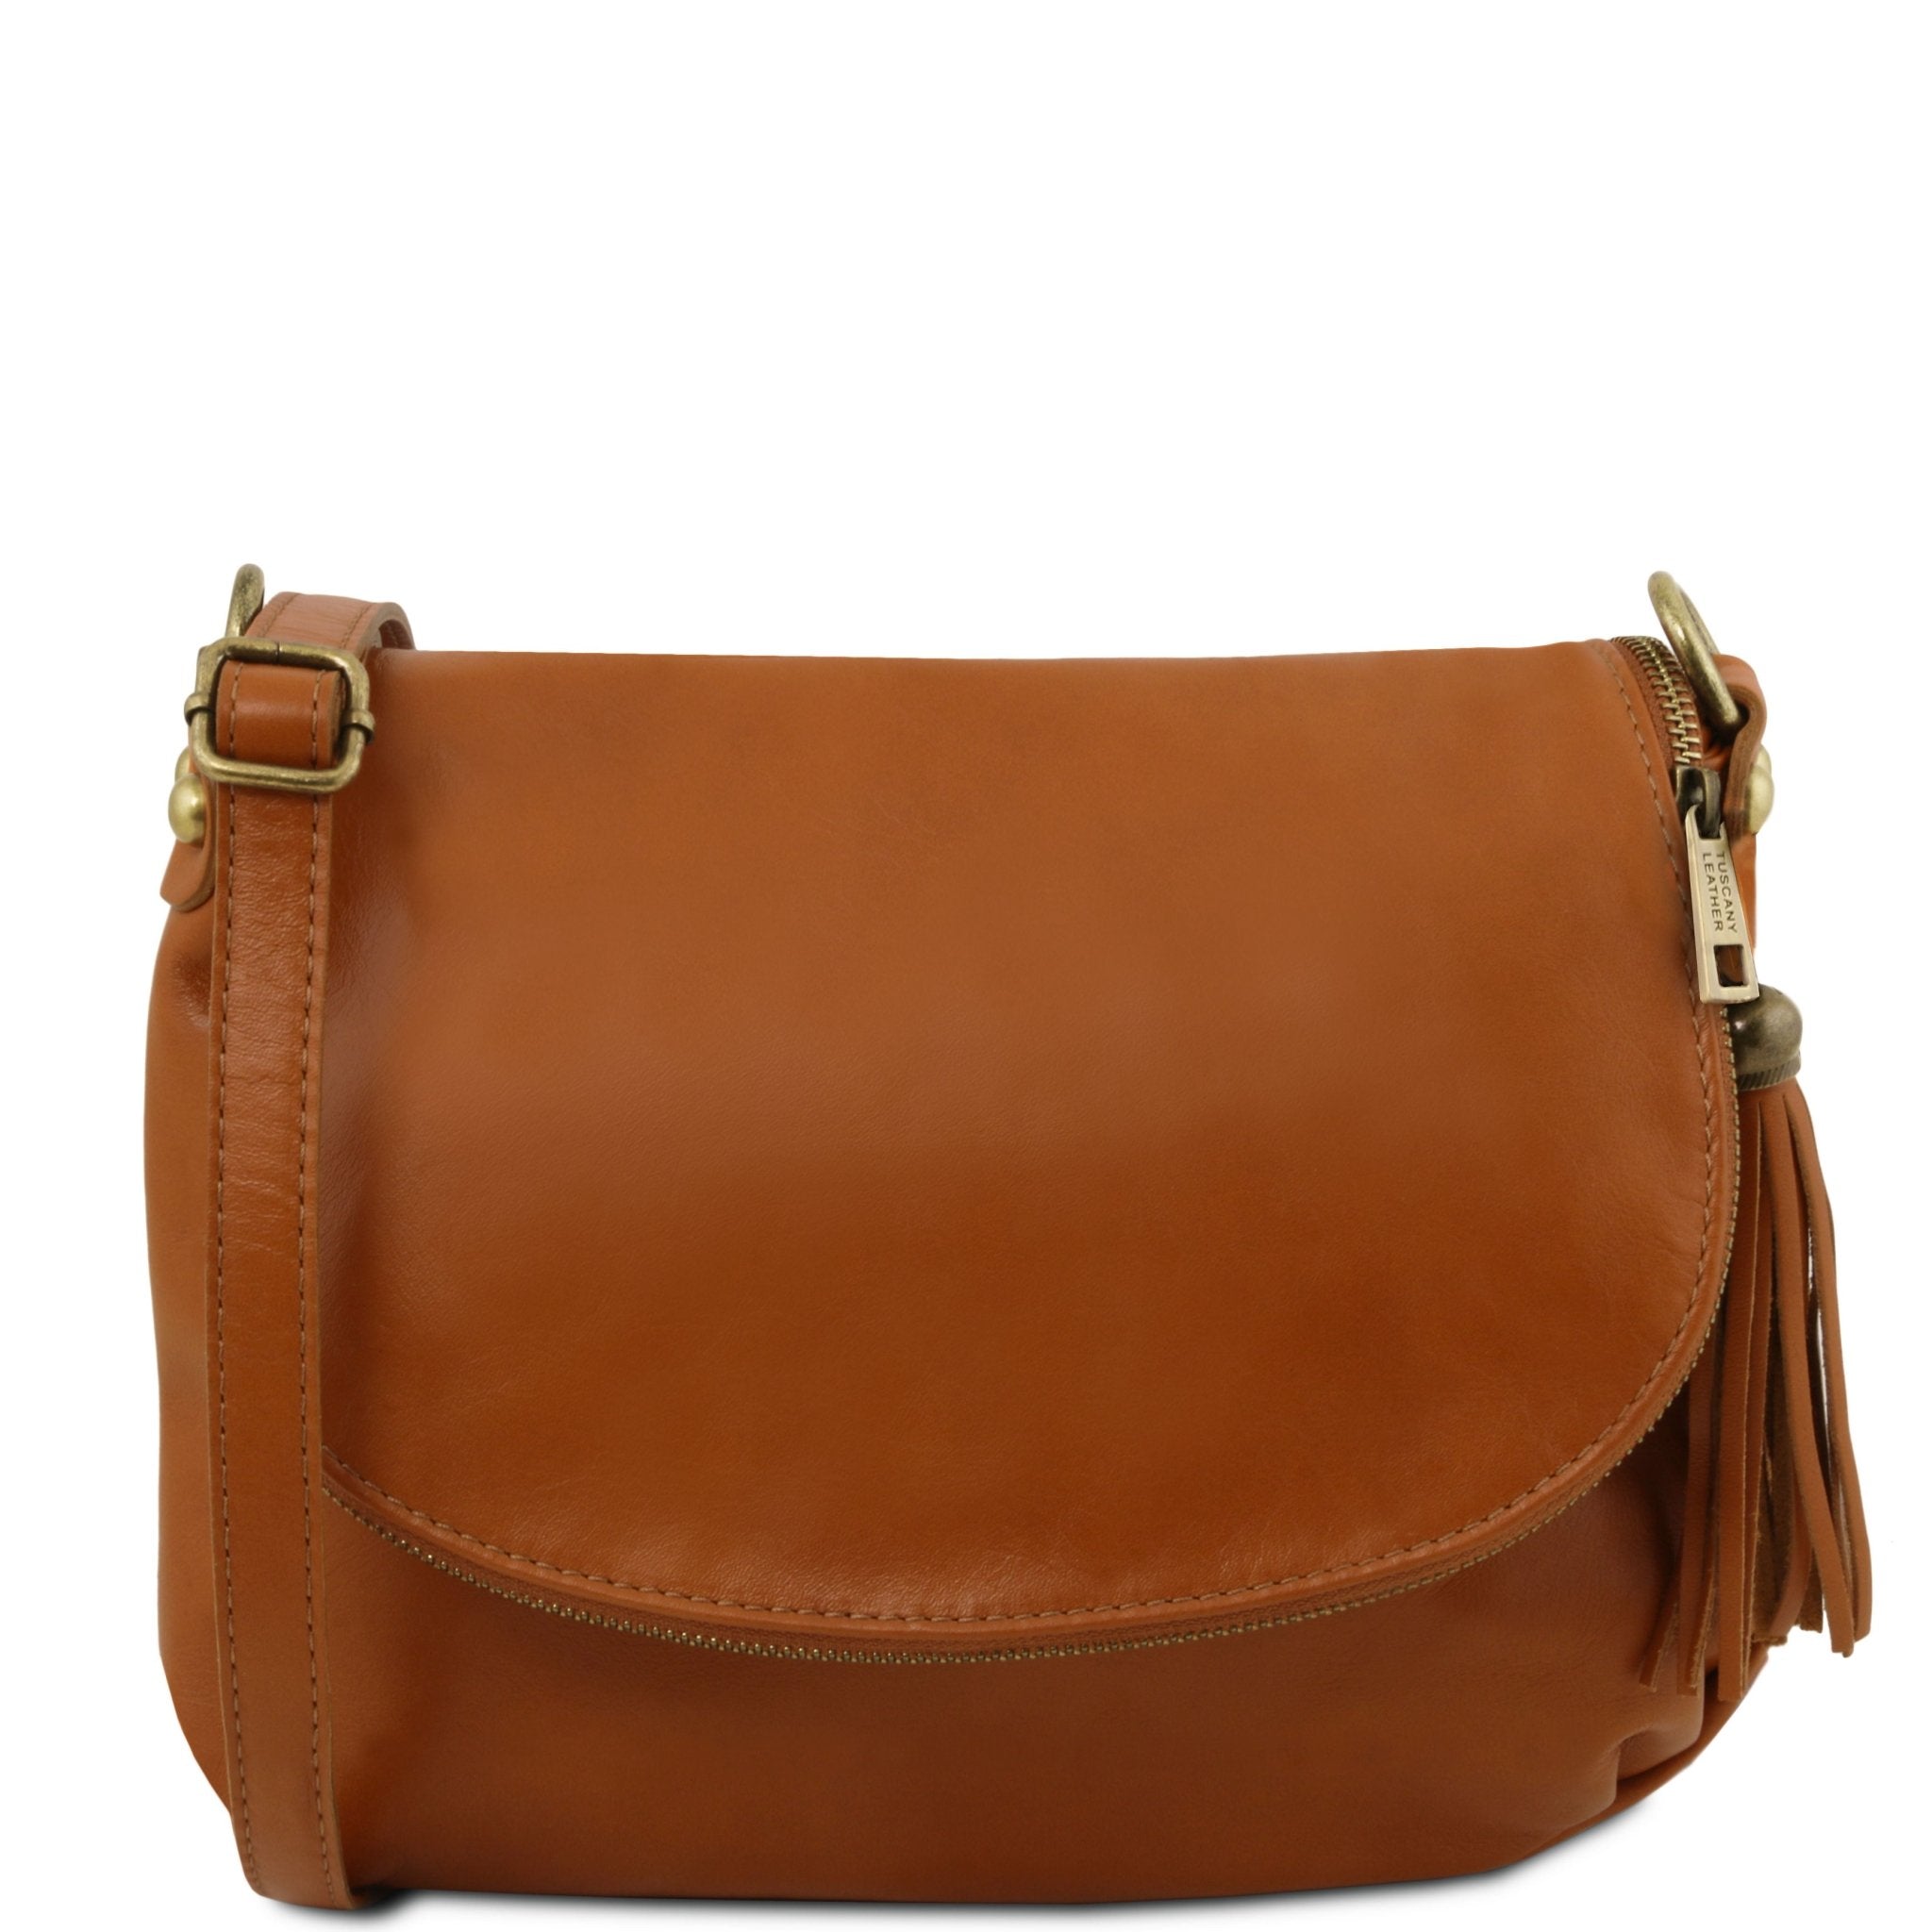 TL Bag Soft Leather Shoulder Bag with Tassel Detail - Small Size - L'Atelier Global